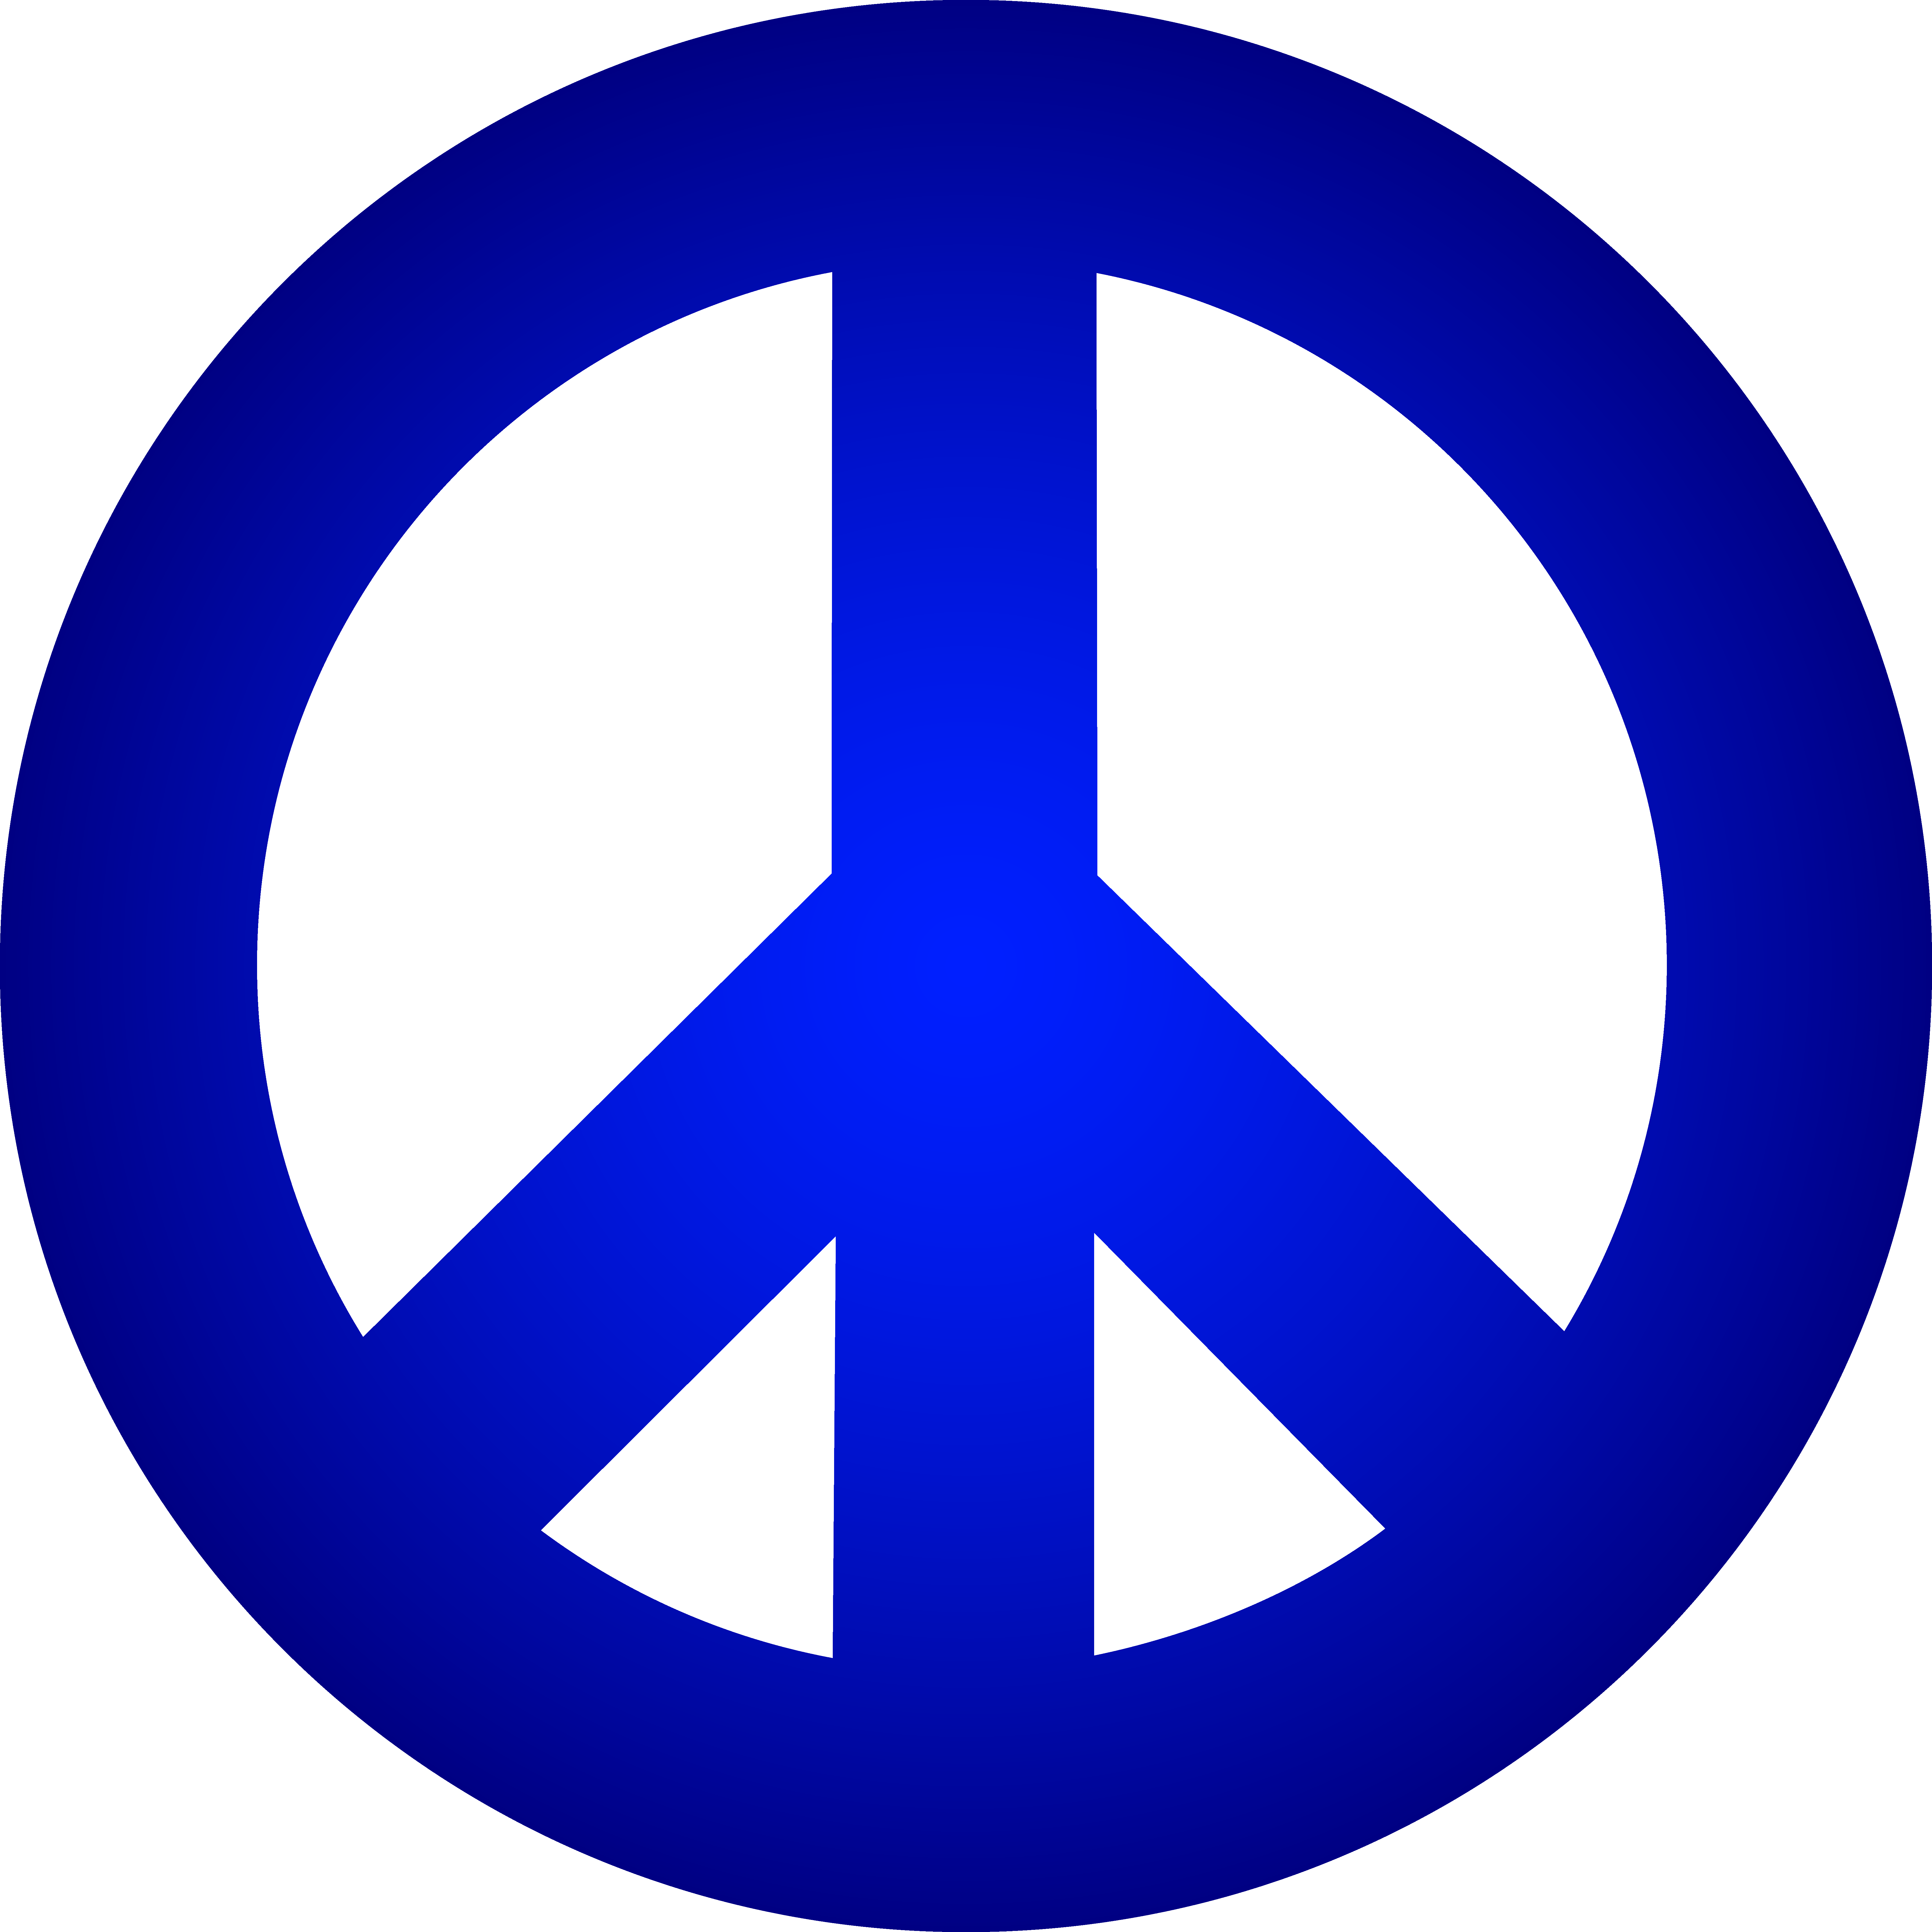 Immagine PNG senza simbolo di pace